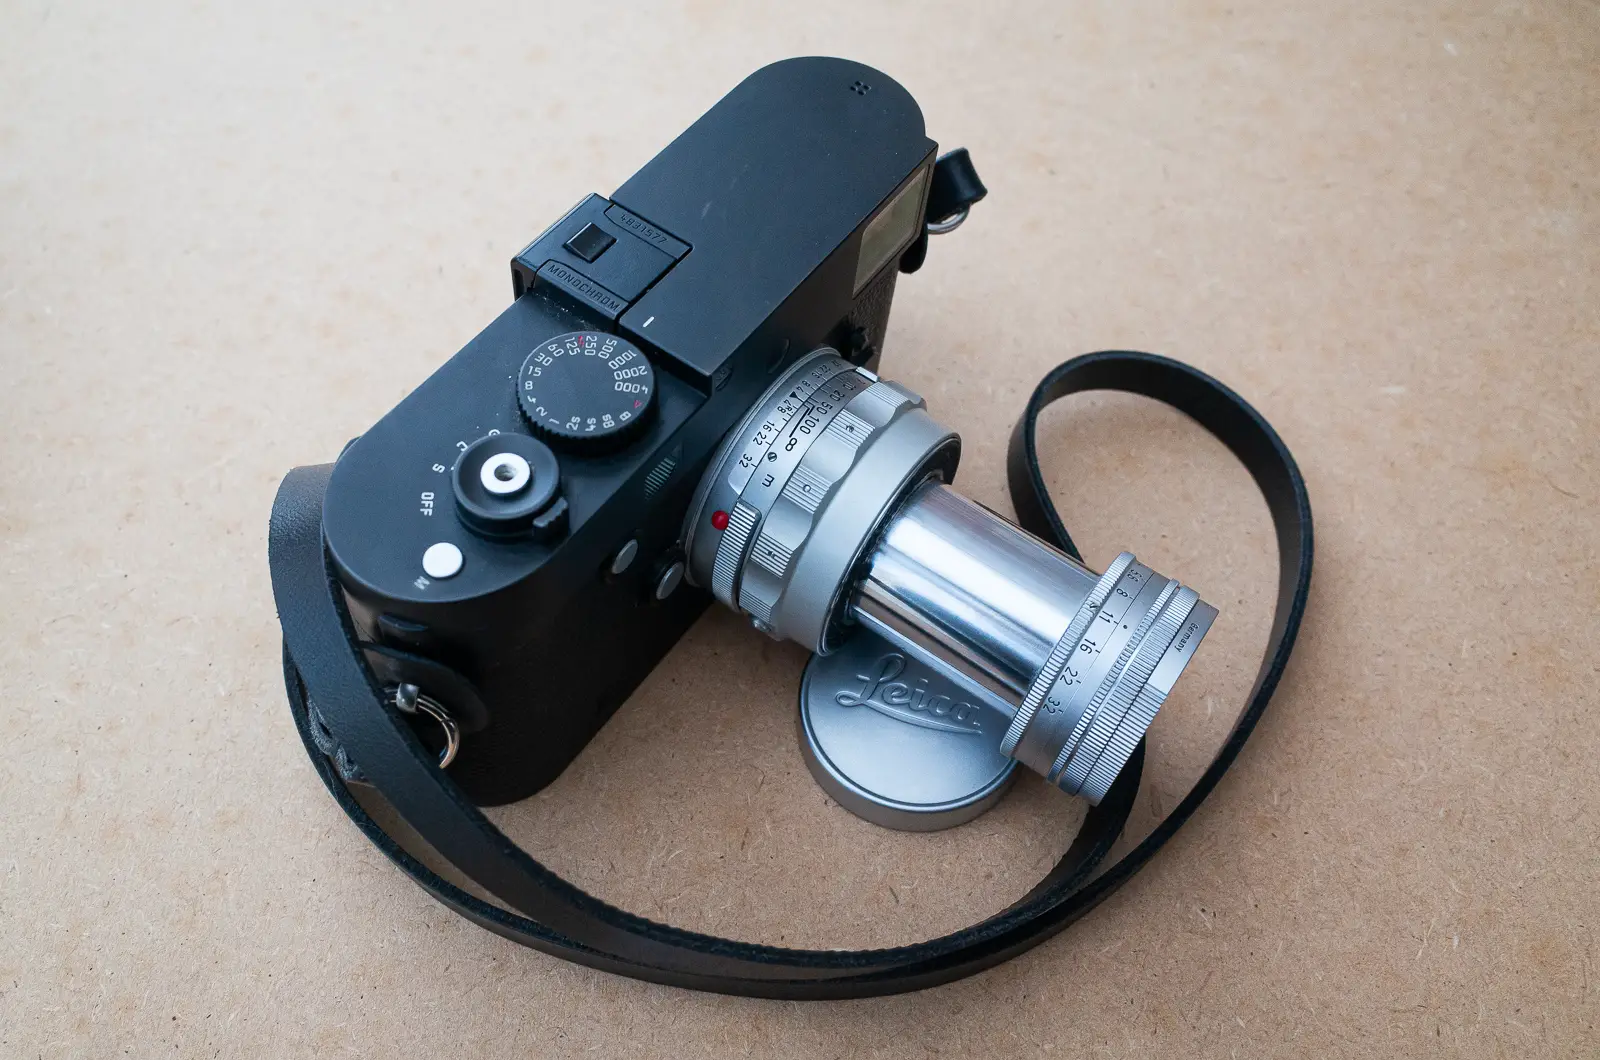 Elmar 9cm f/4 extended, mounted on a Leica M Monochrom typ 246